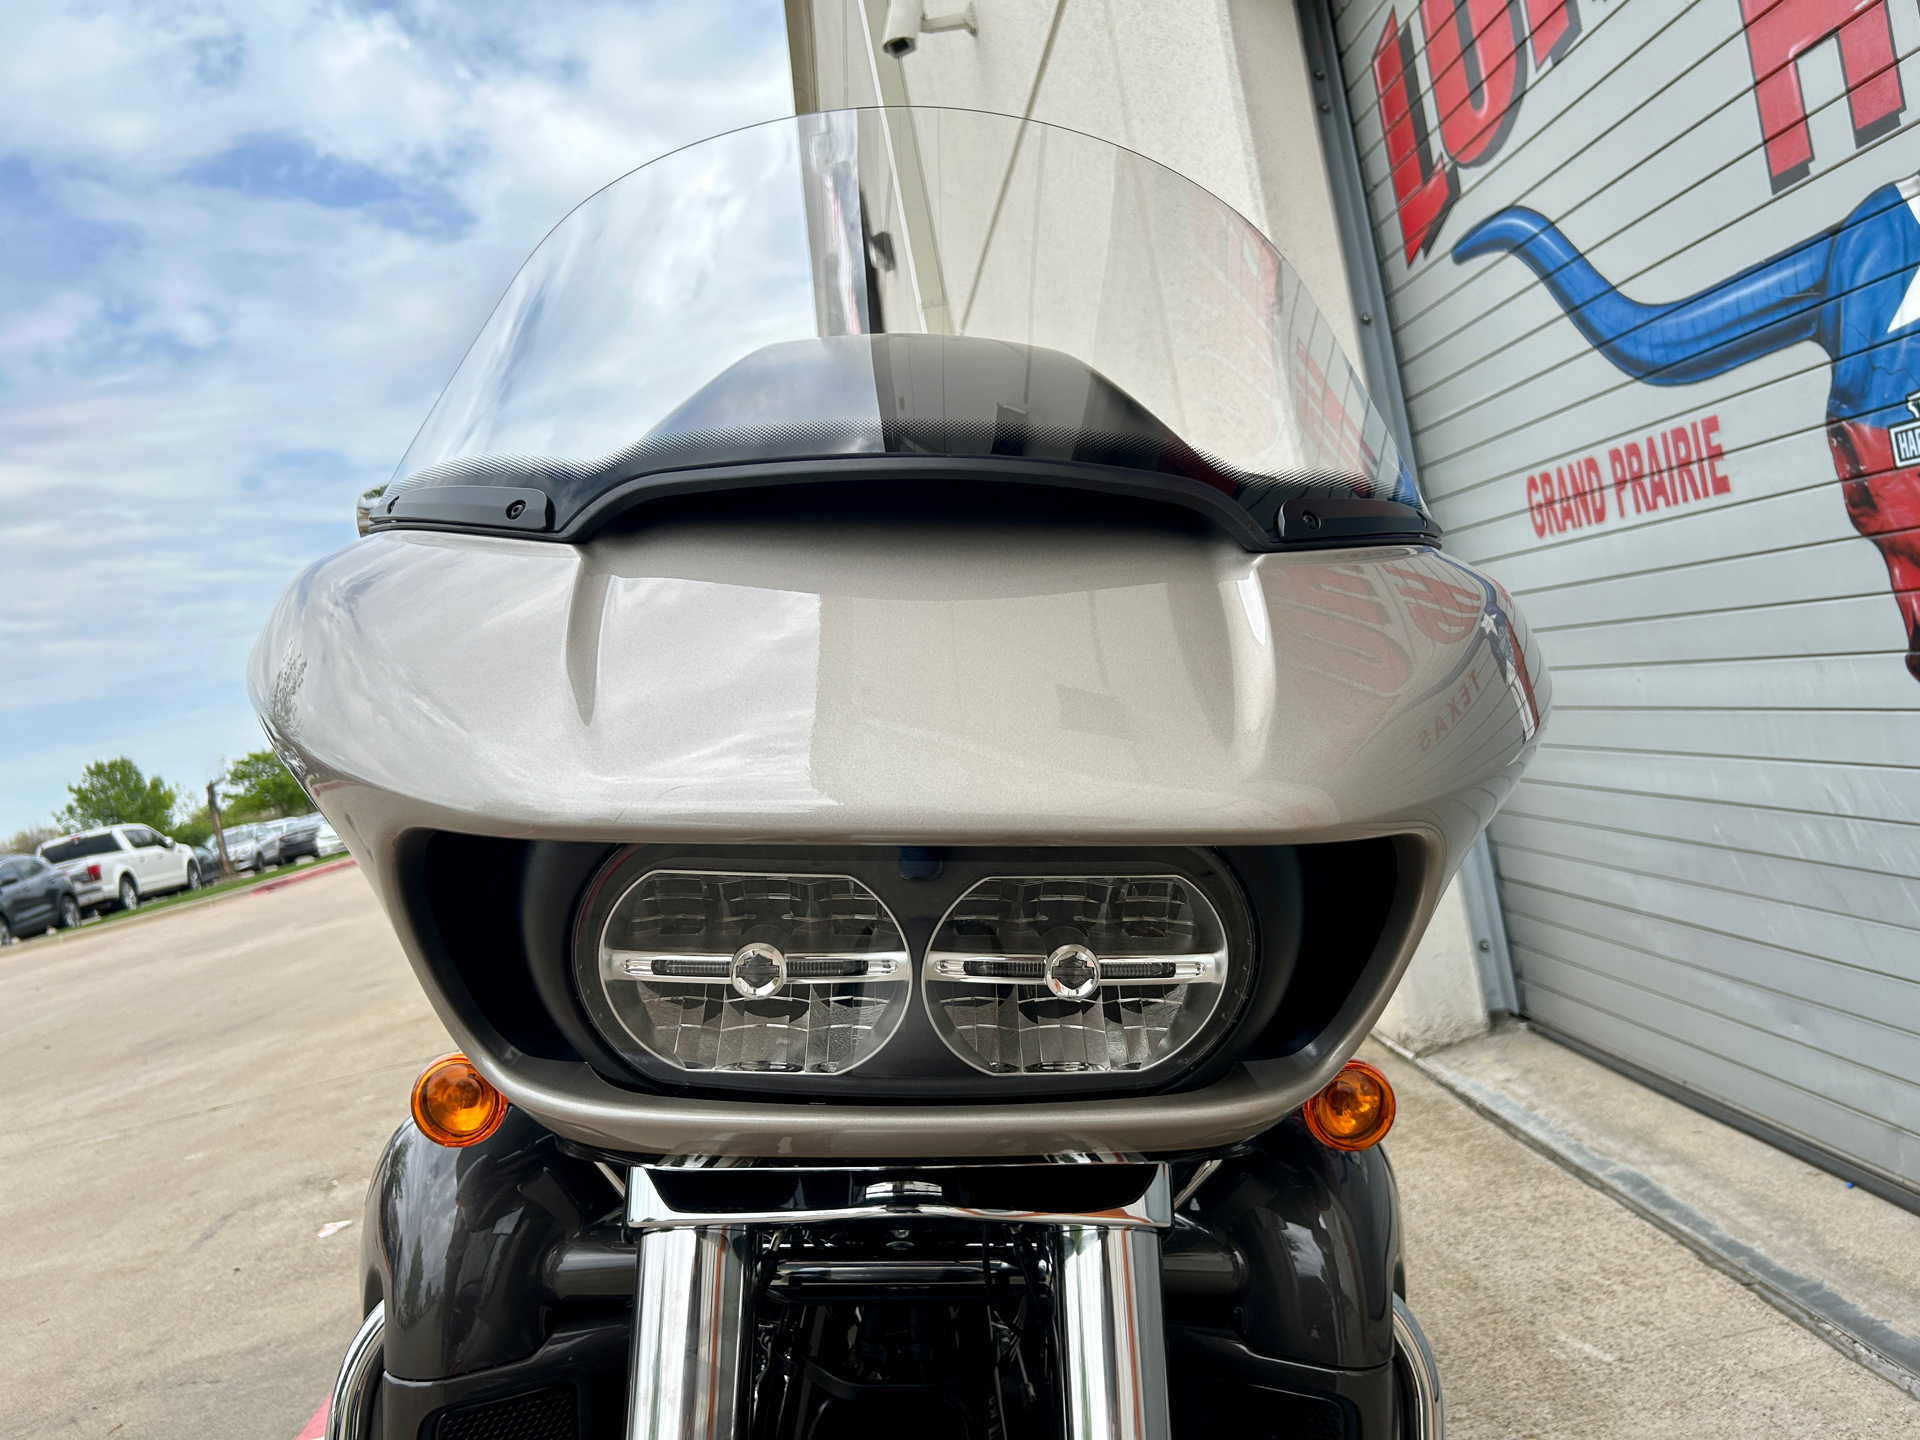 2023 Harley-Davidson Road Glide® Limited in Grand Prairie, Texas - Photo 5